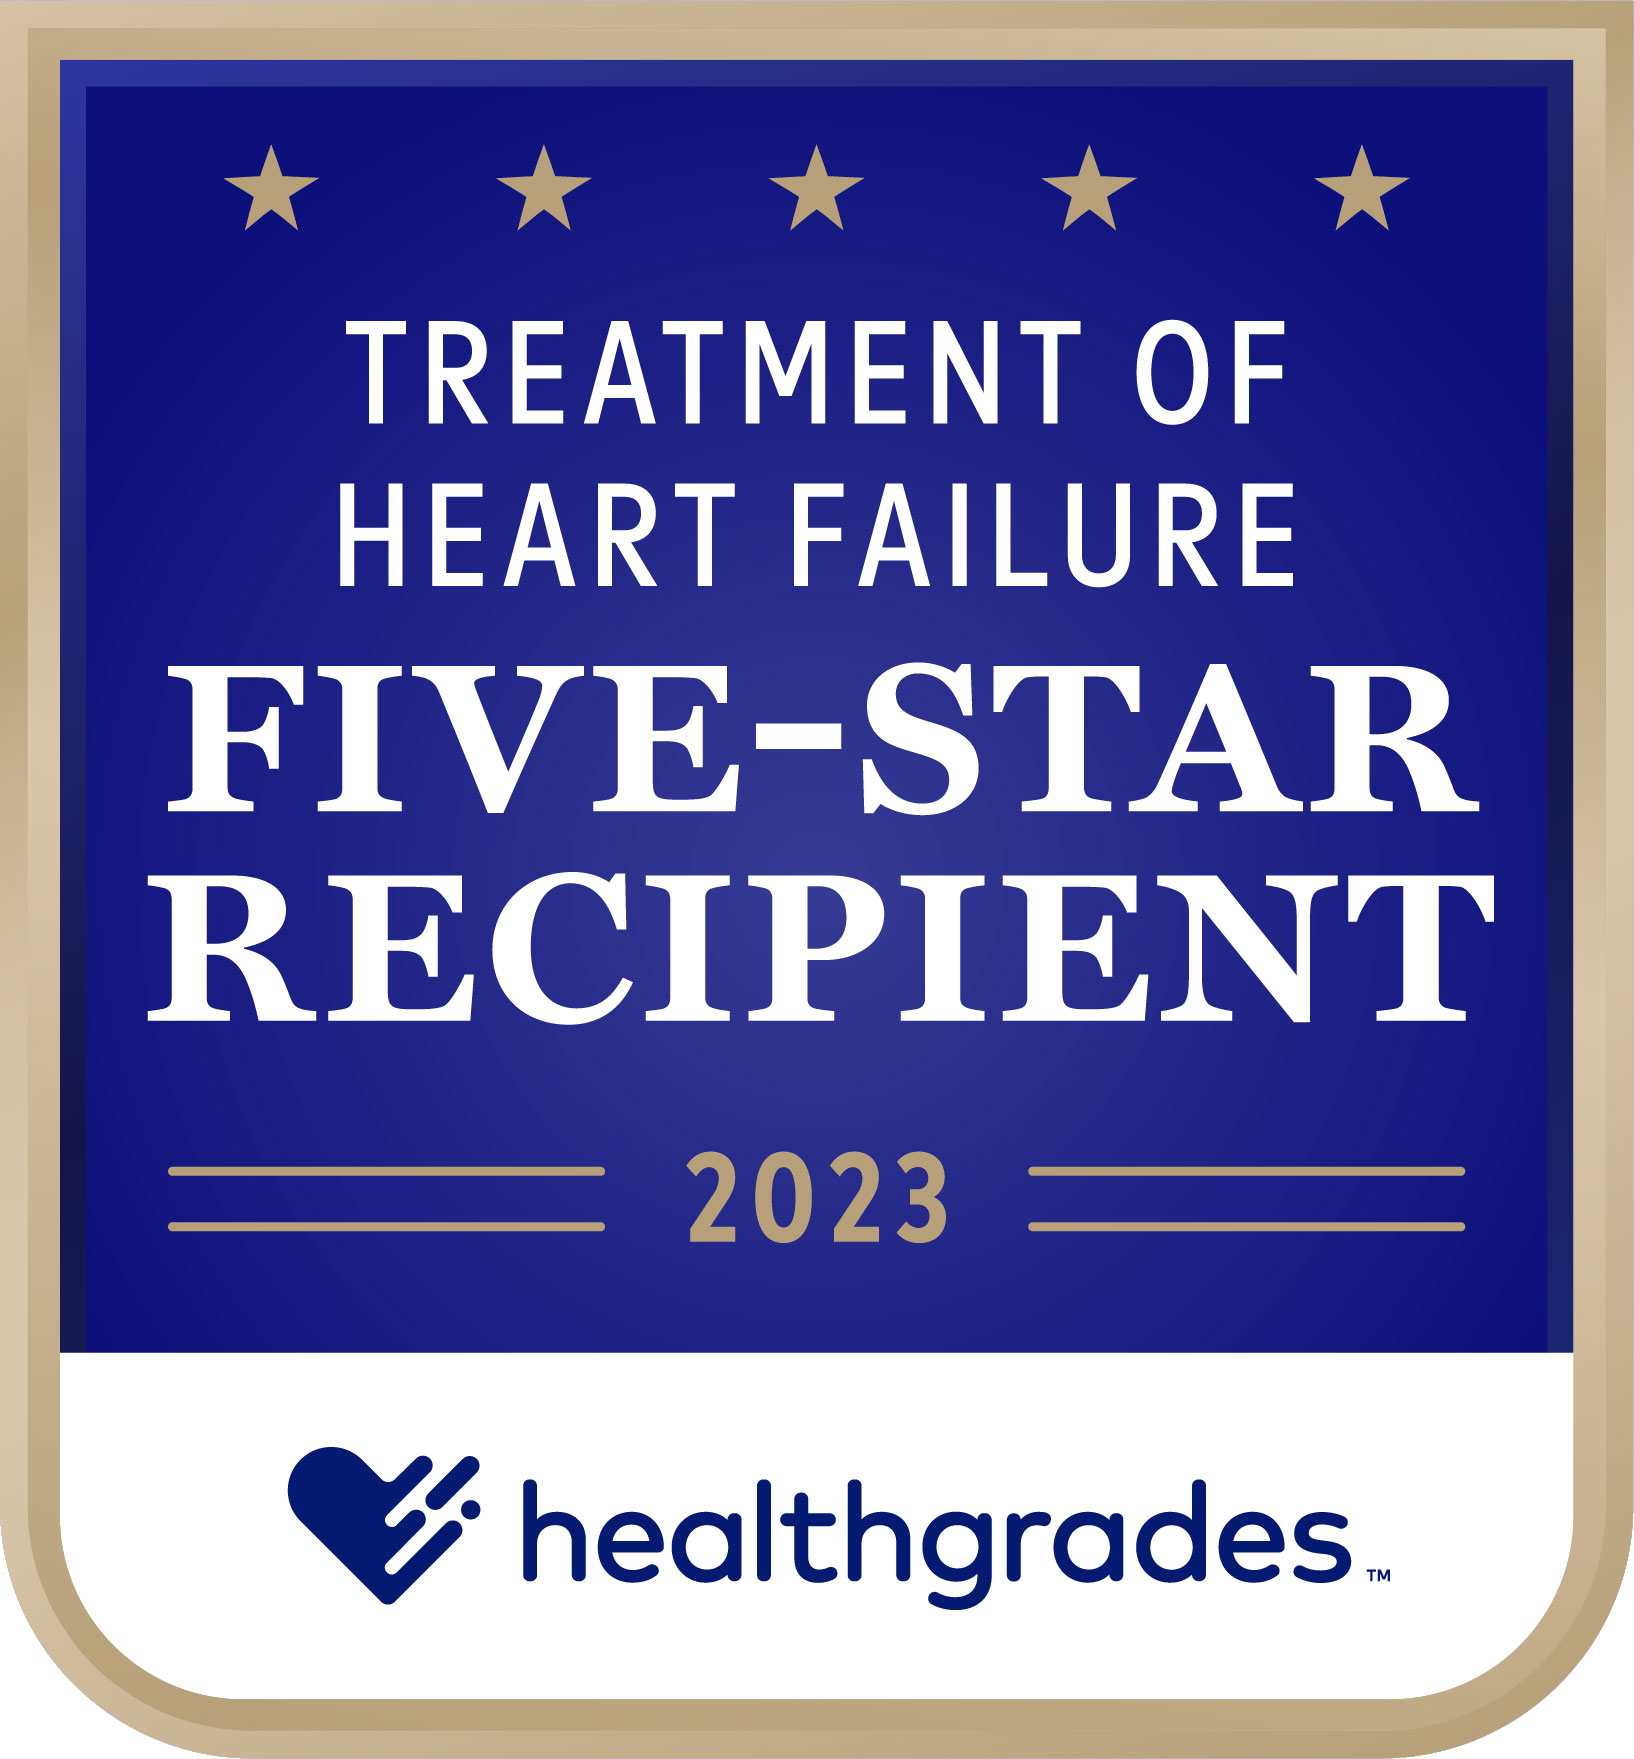 Treatment of Heart failure five star recipient